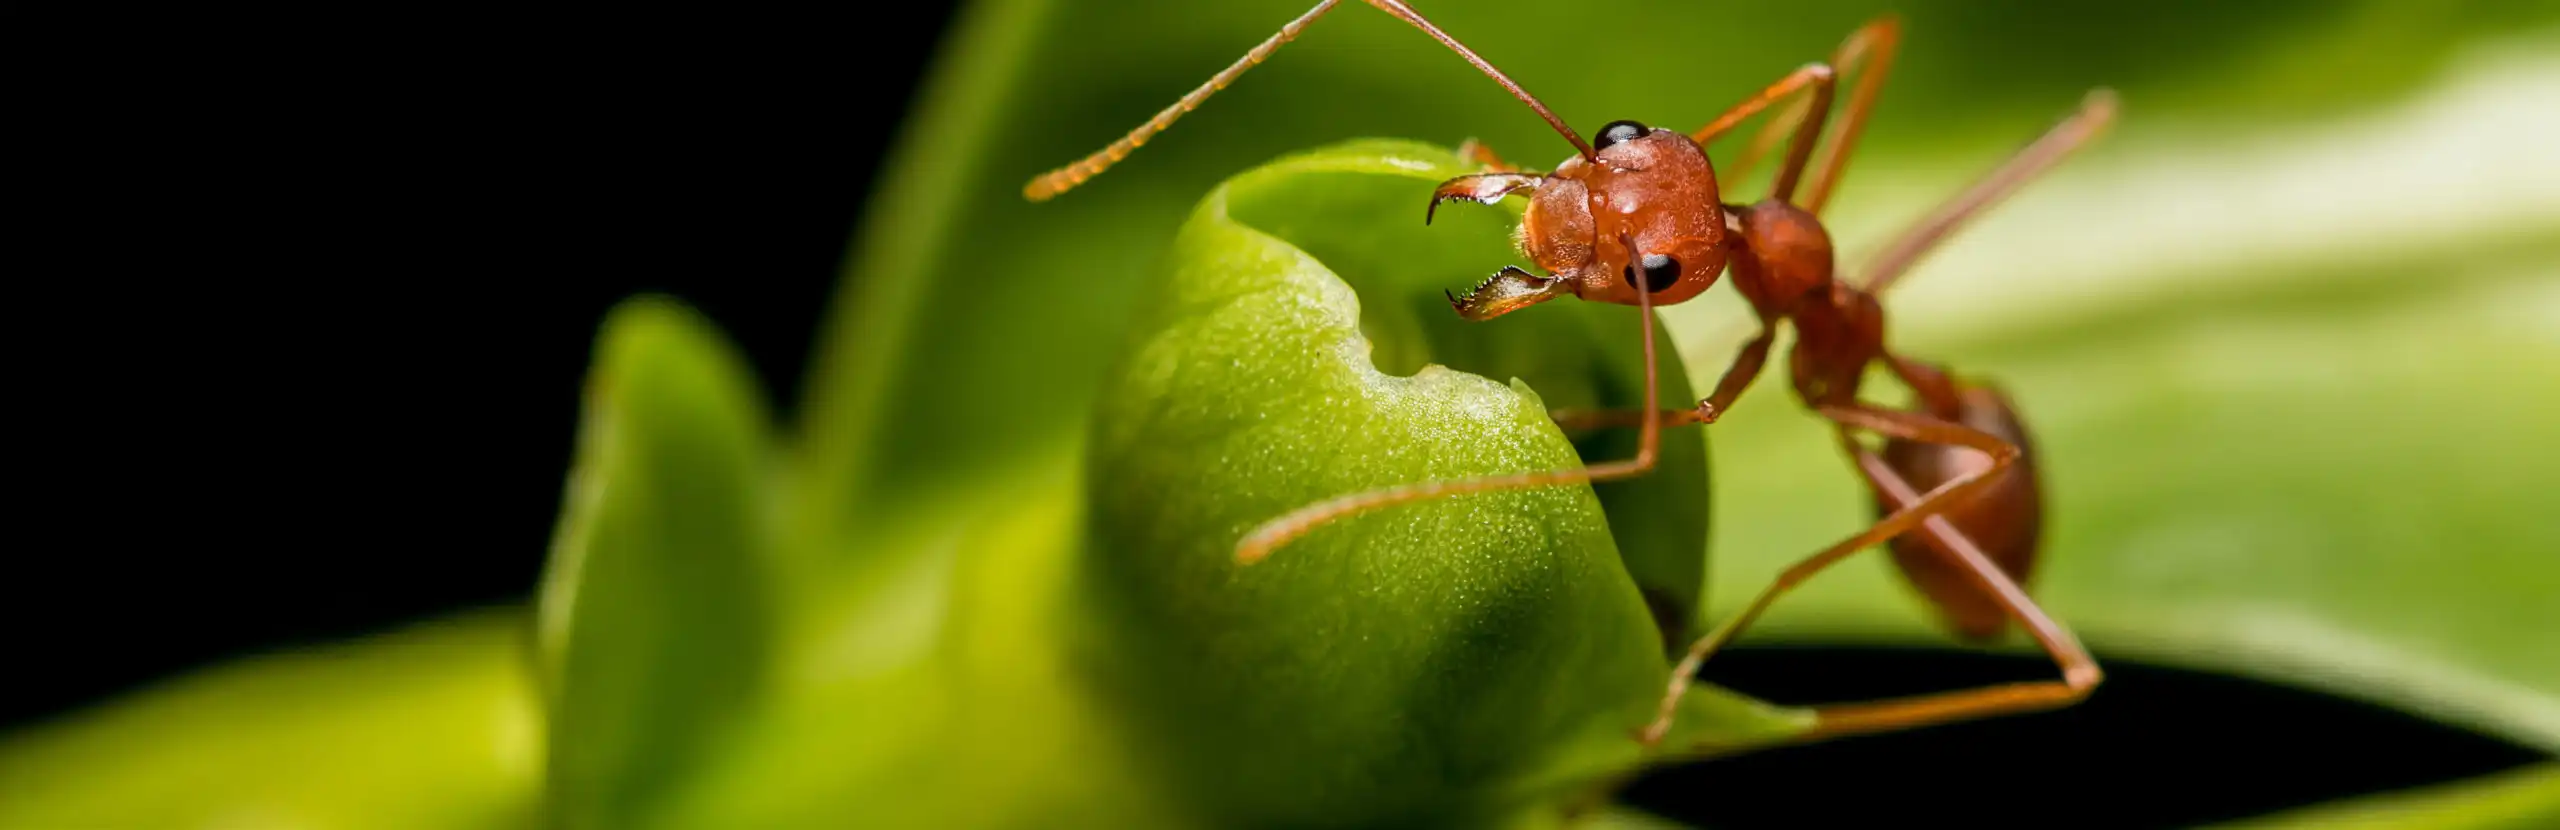 Ant Exterminator in Central Florida